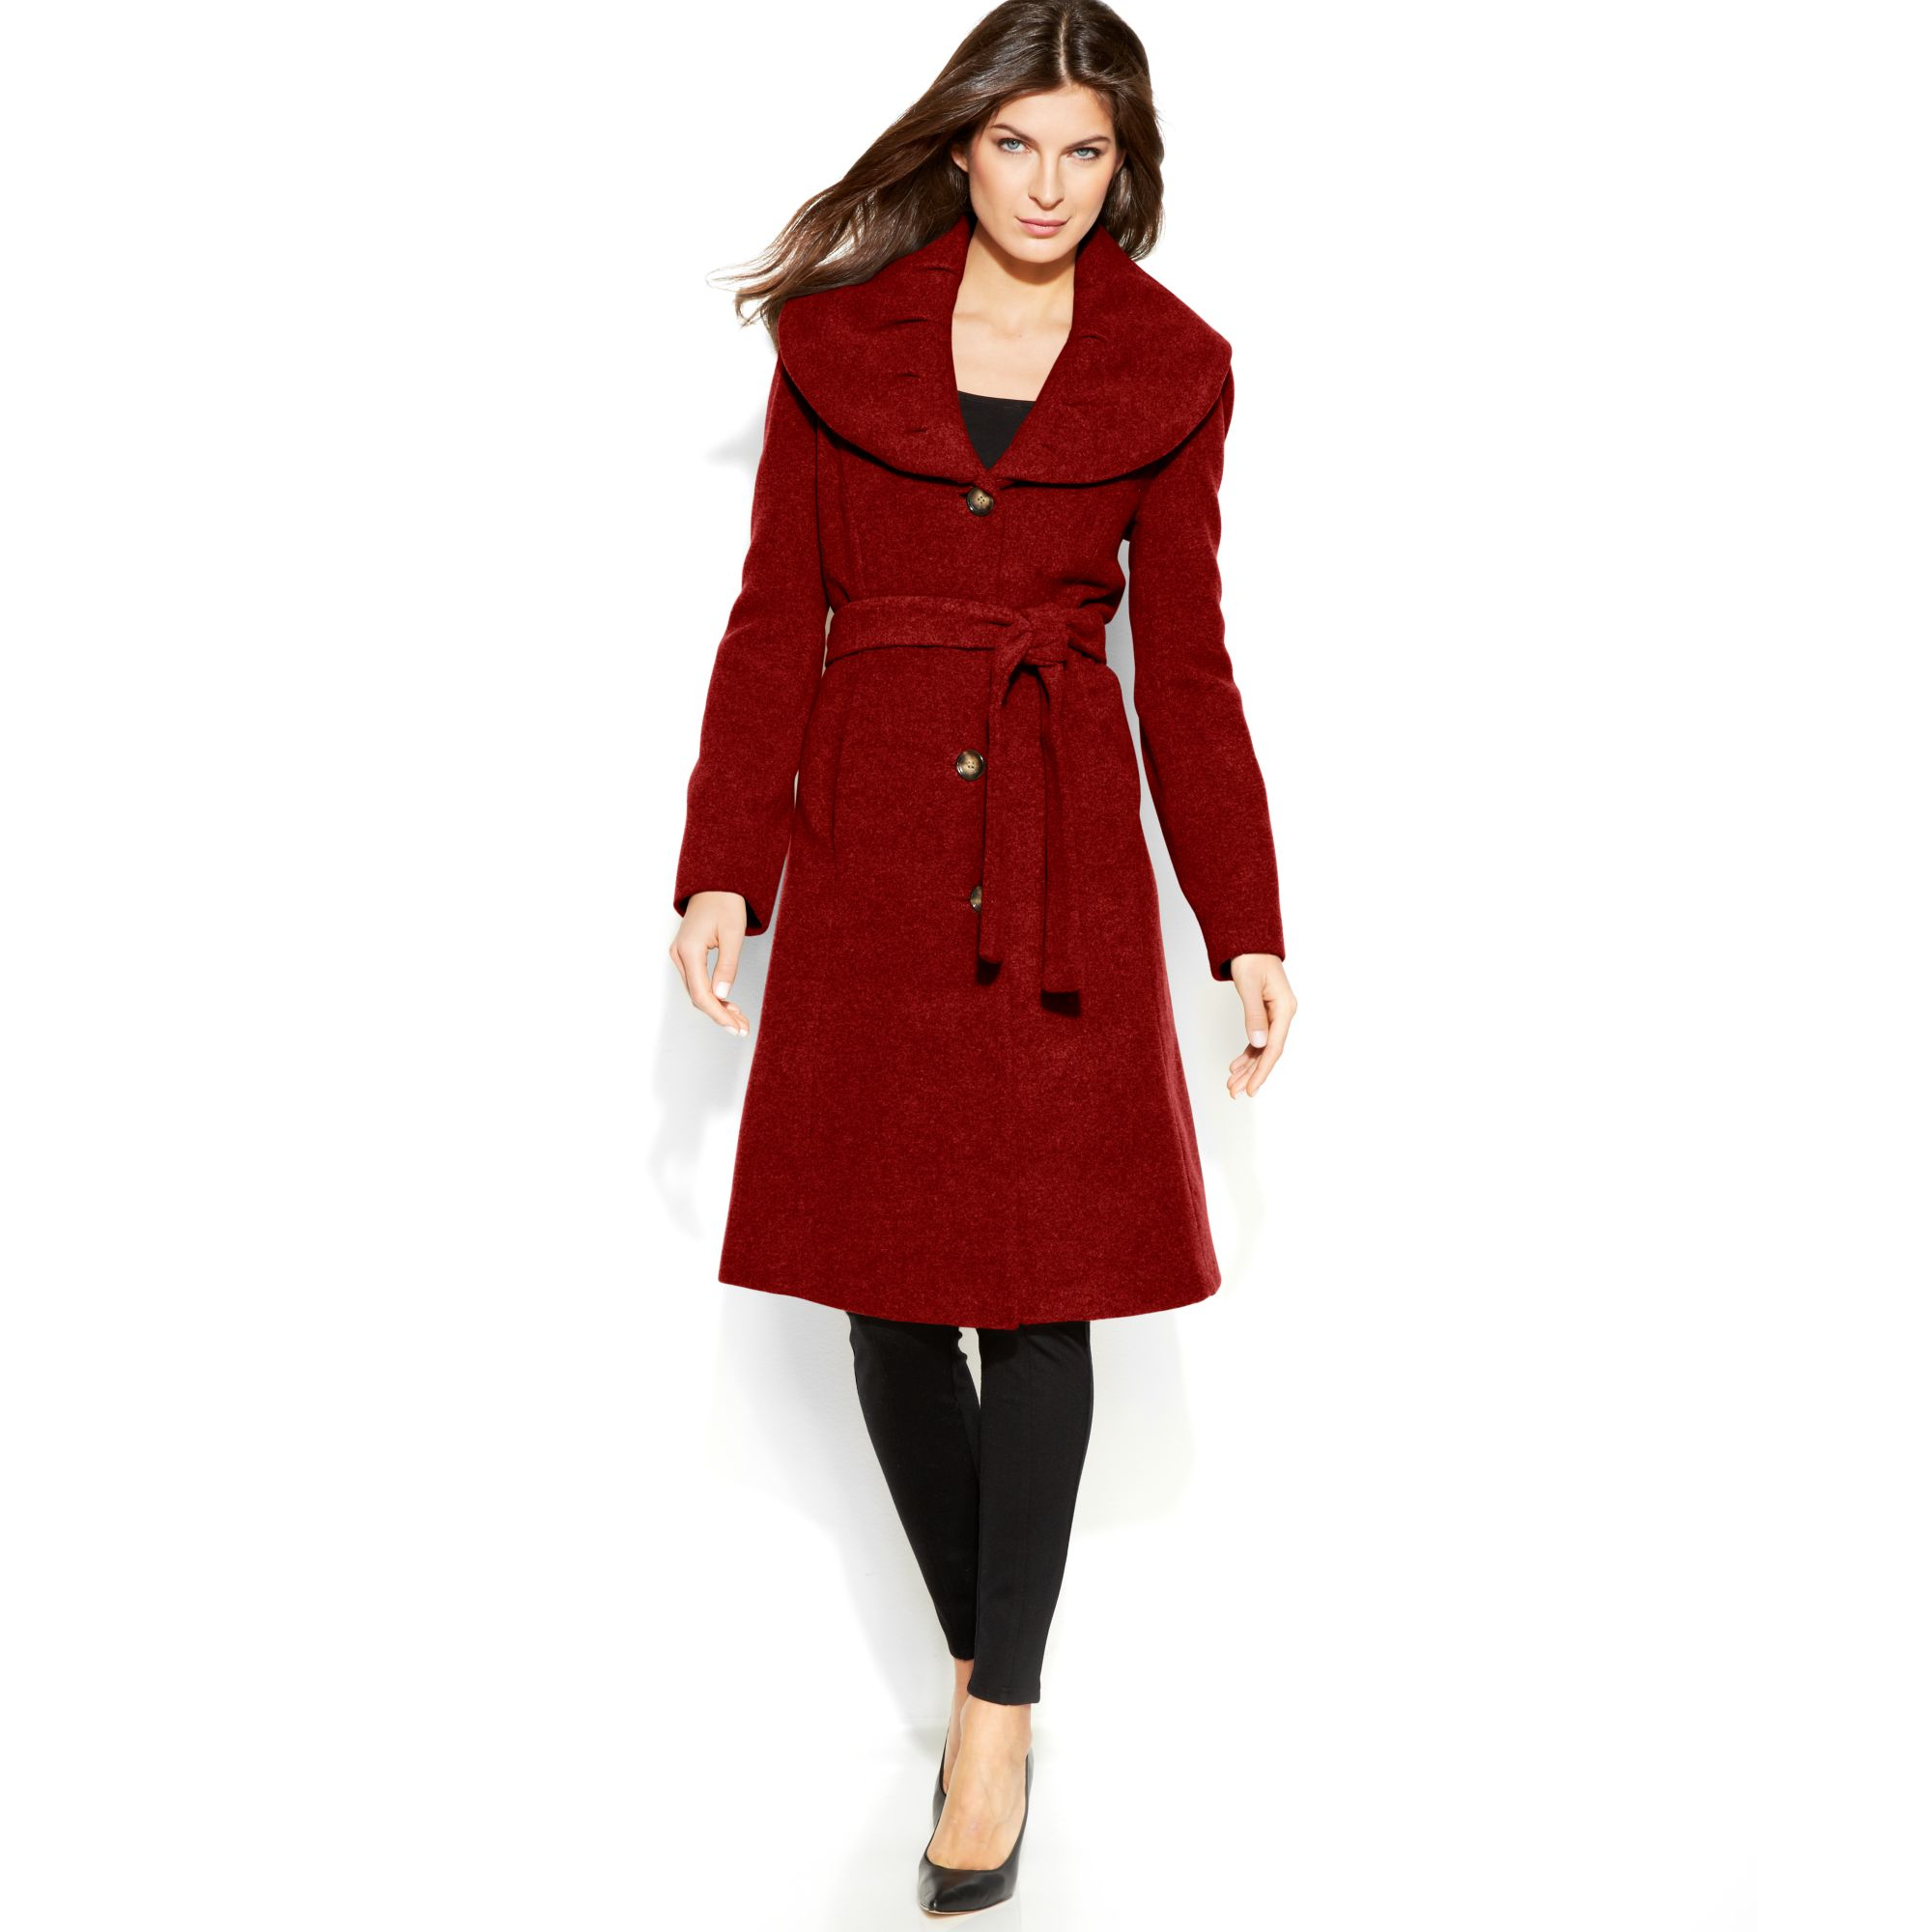 Lyst - Calvin Klein Shawl Collar Belted Walker Coat in Red